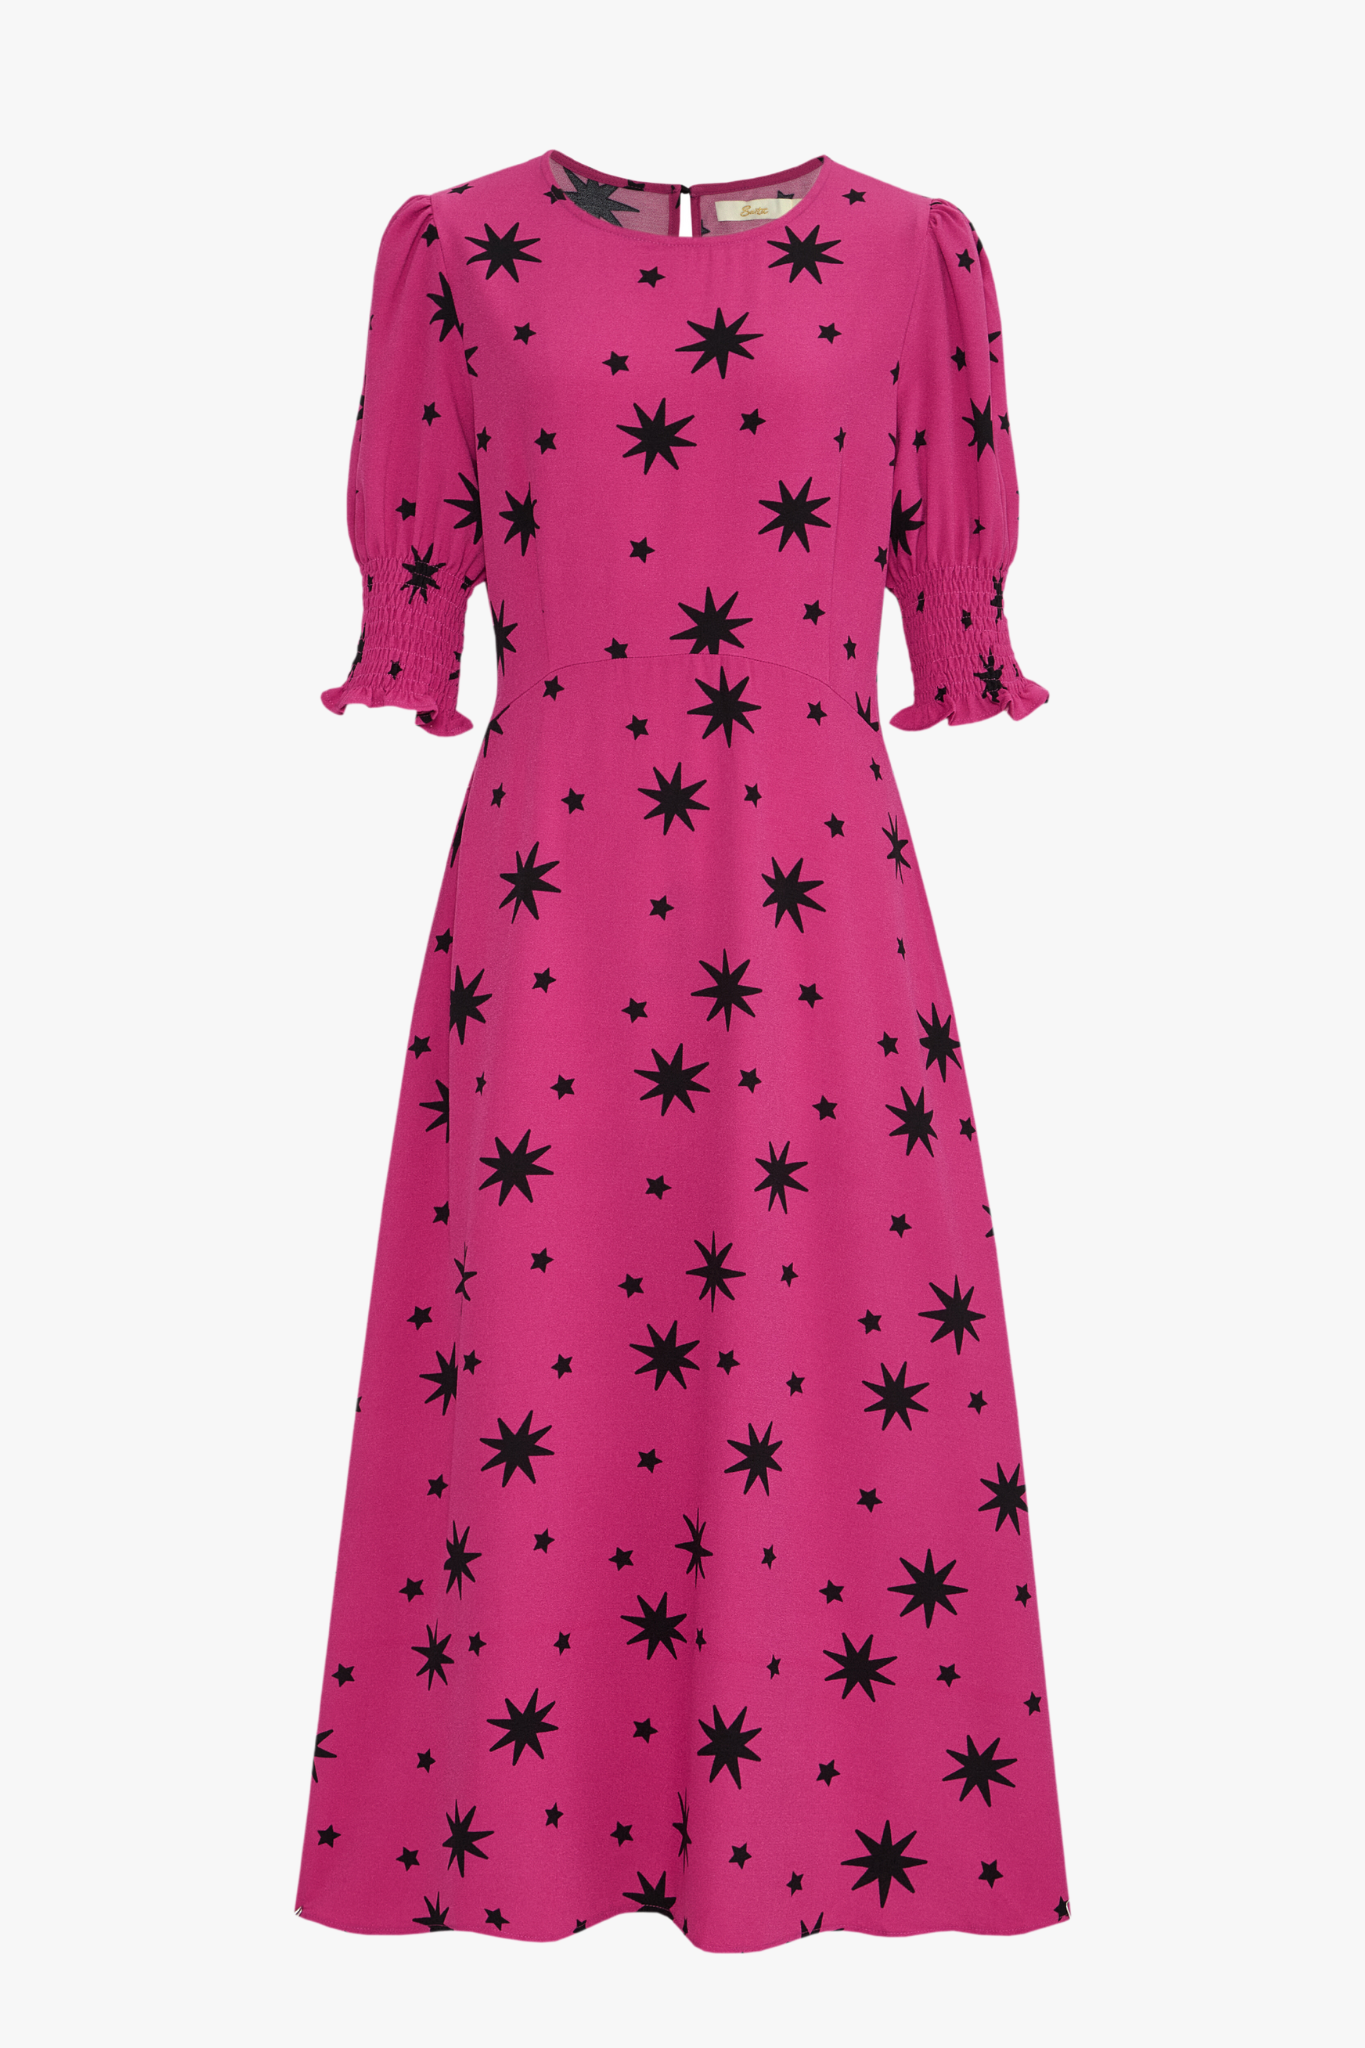 Twyla Pink Maxi Dress with Black Star Print